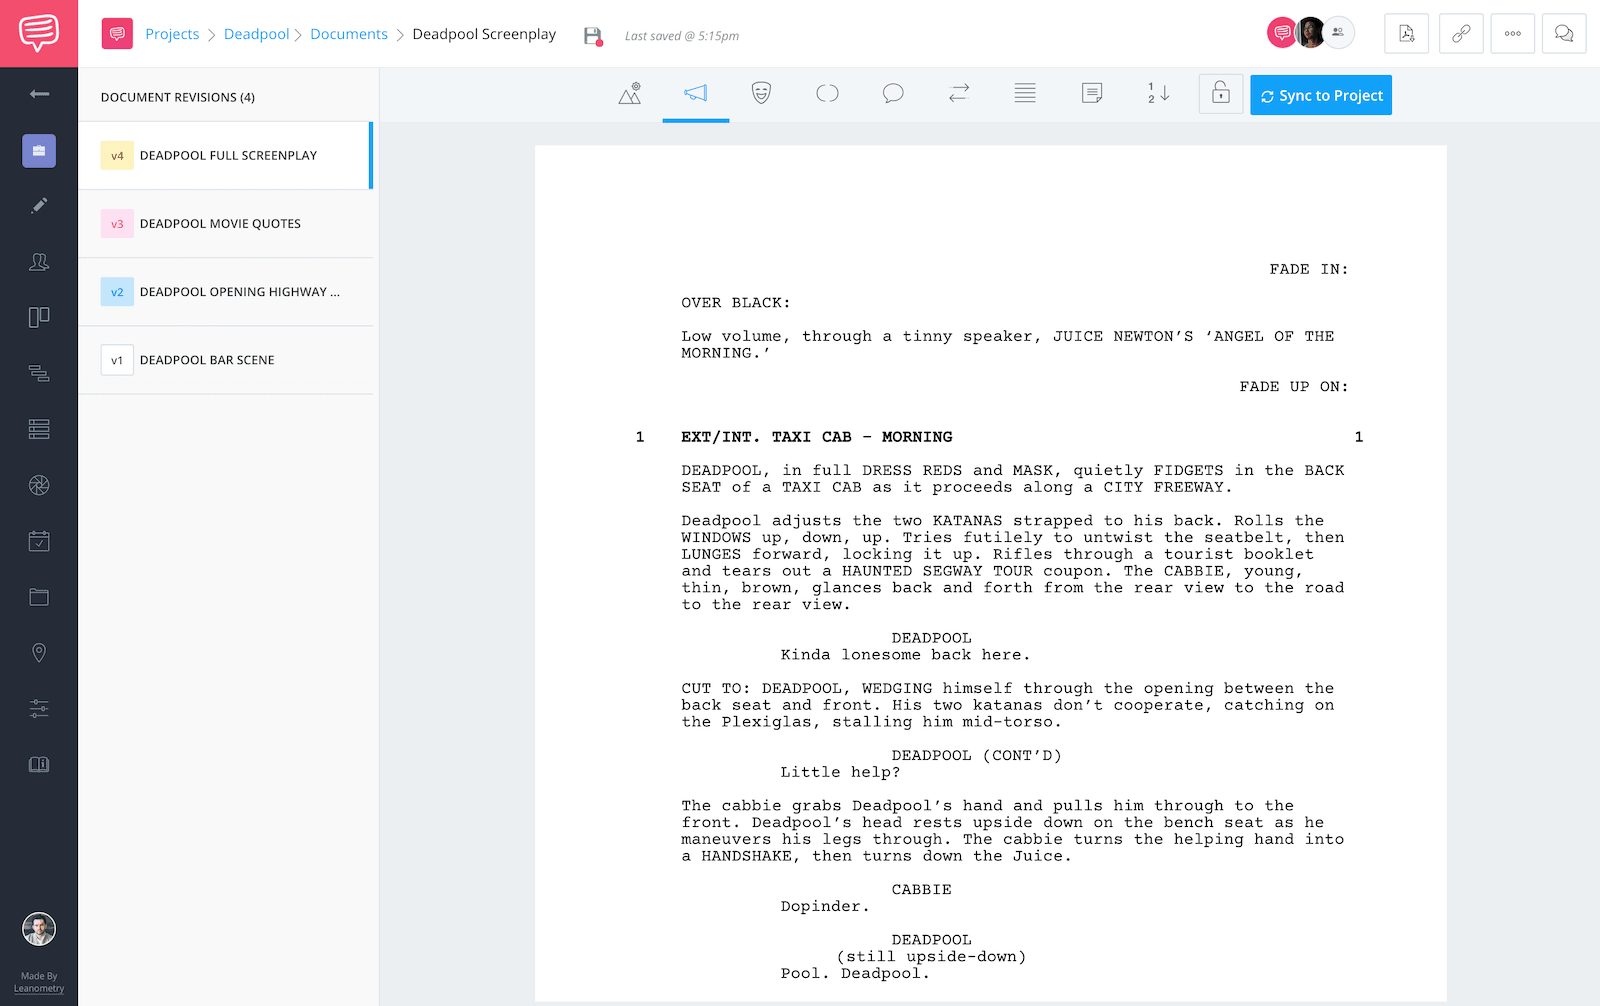 Deadpool script teardown - full screenplay featured image - StudioBinder